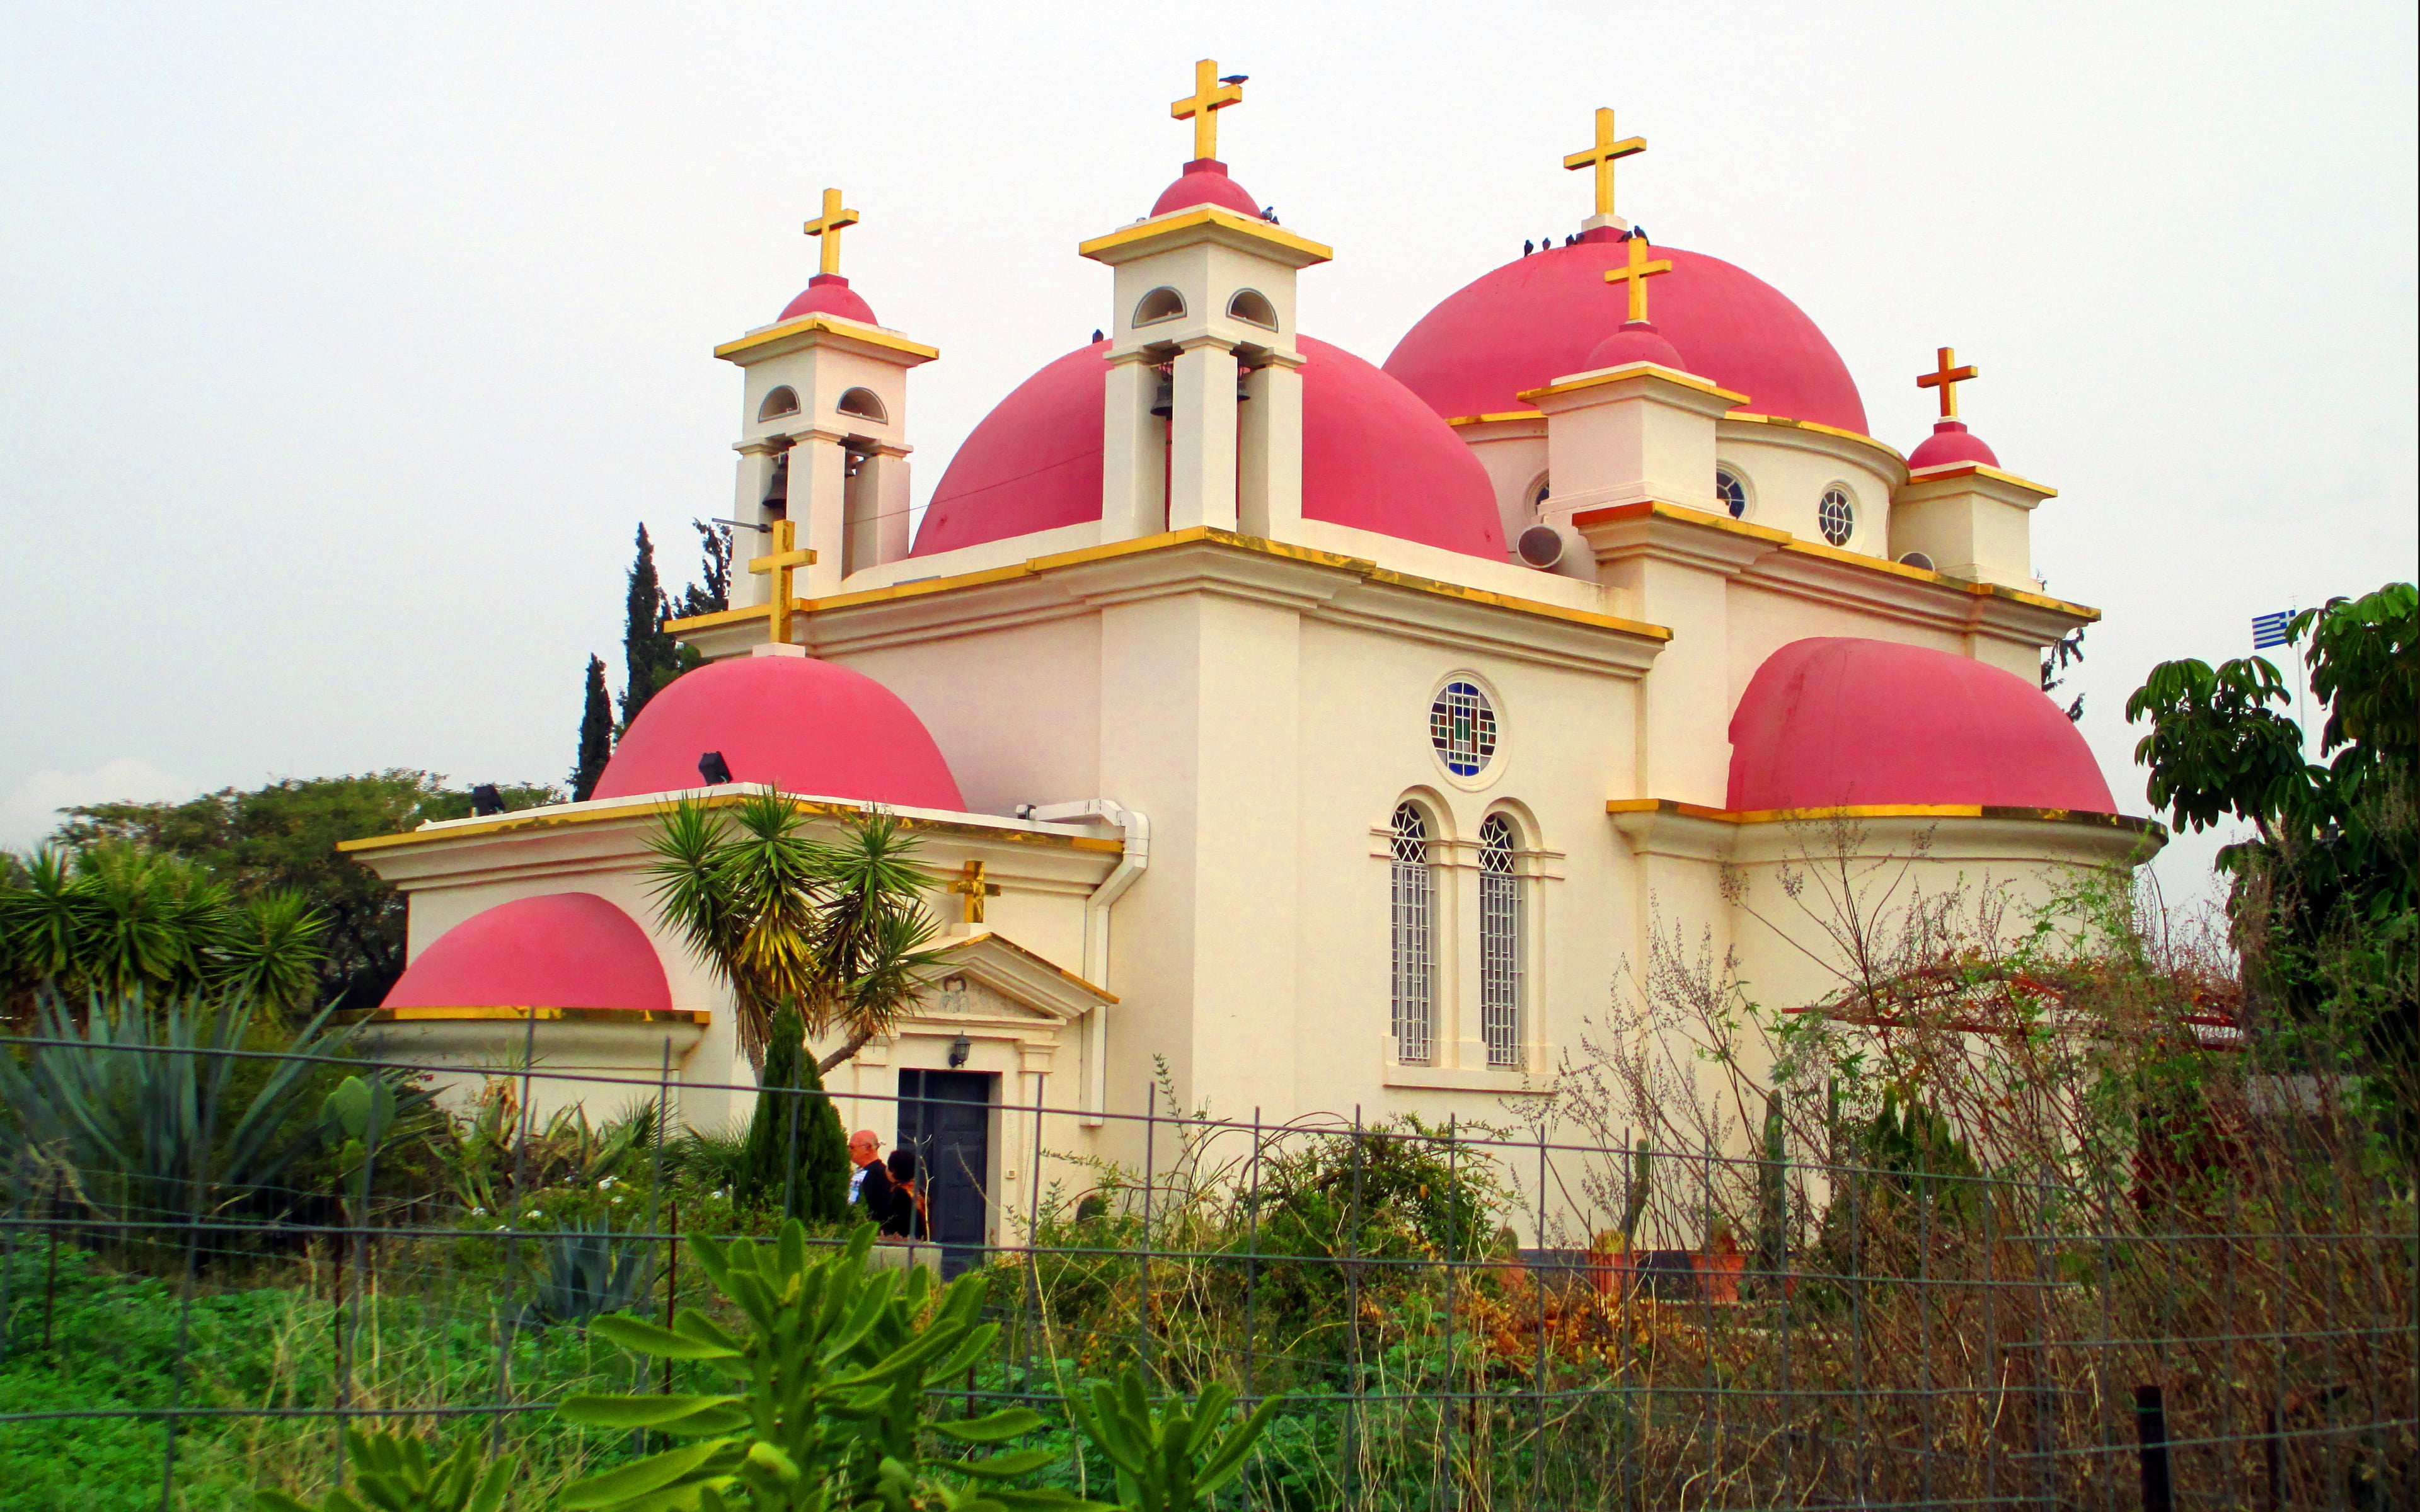 Israel 34485 Greek   Orthodox Church In Capernaum 2781, built structure